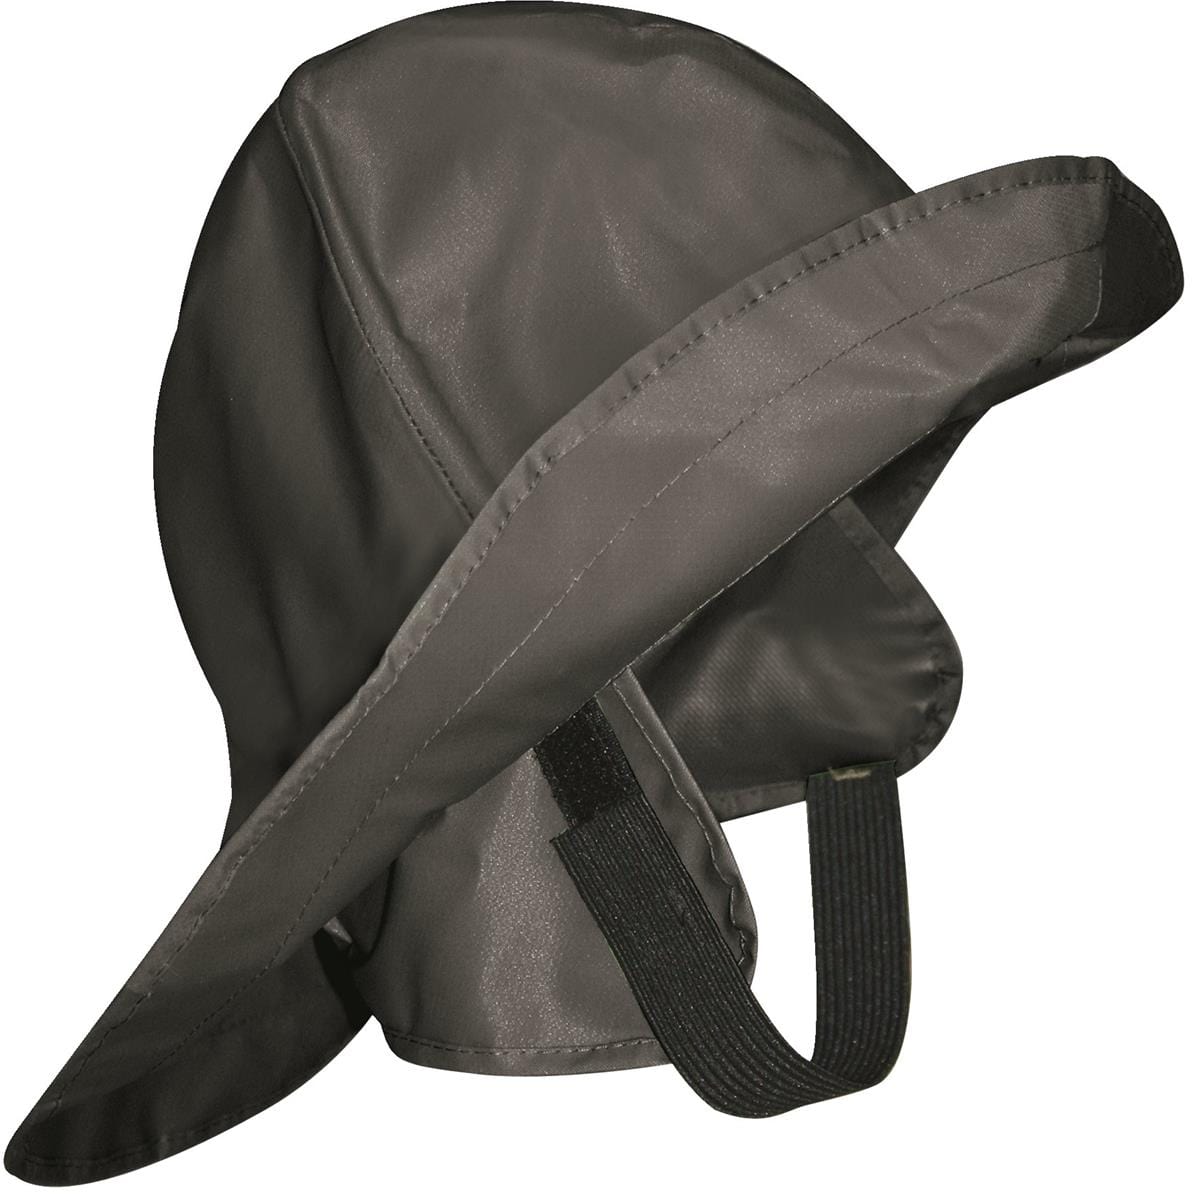 Men's Sou'wester Hat, Black by Gemplers